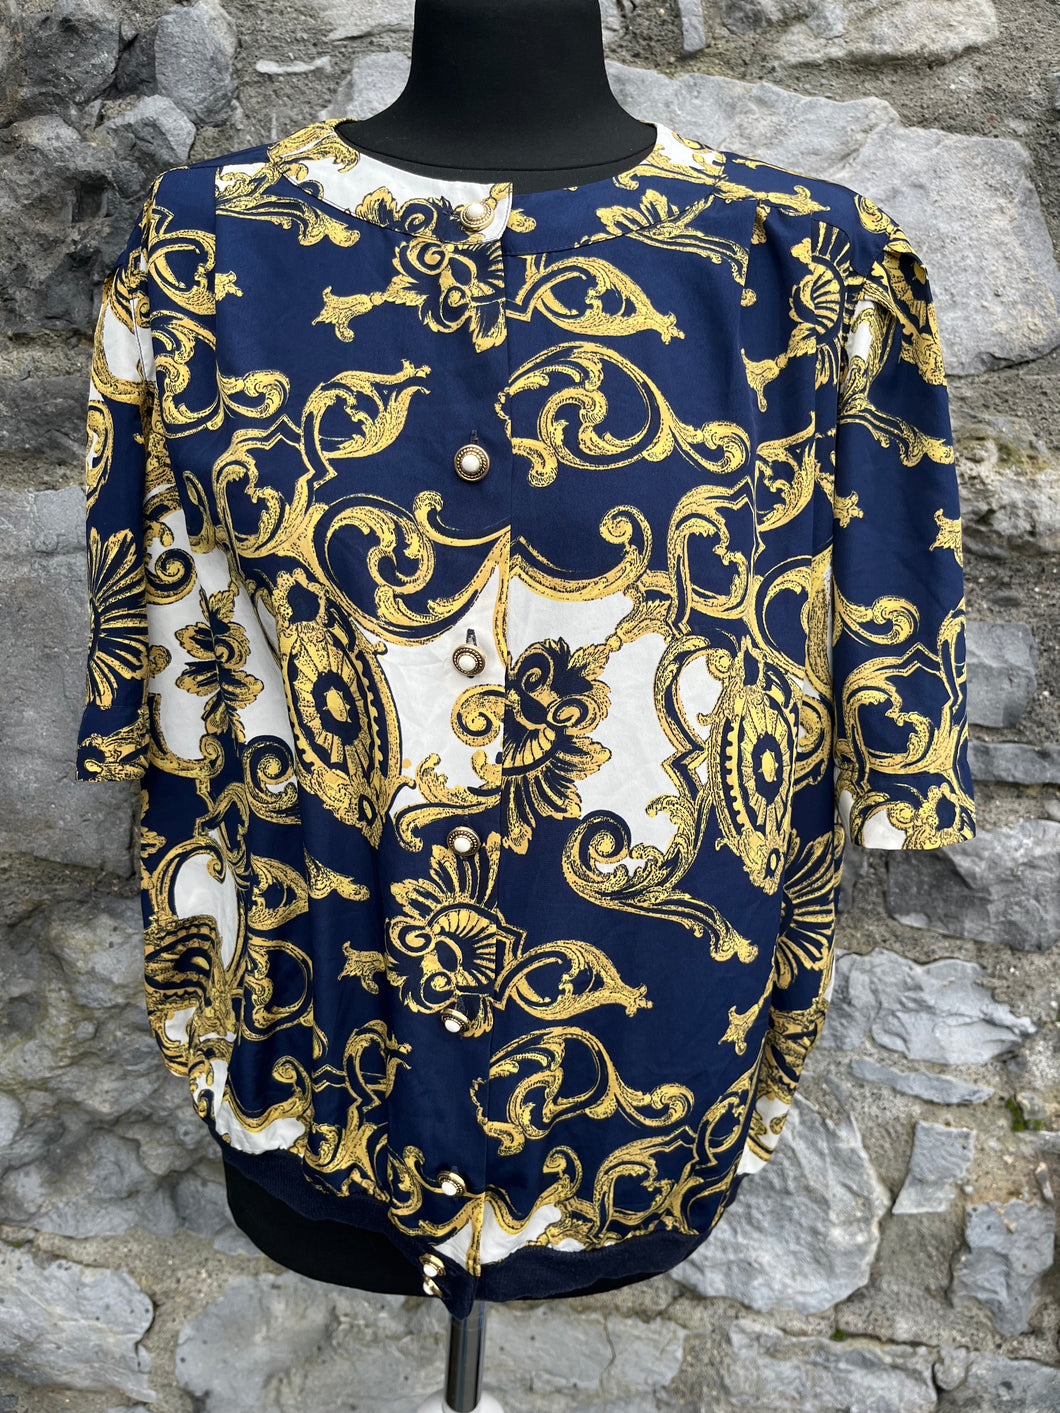 80s baroque print blouse uk 14-16